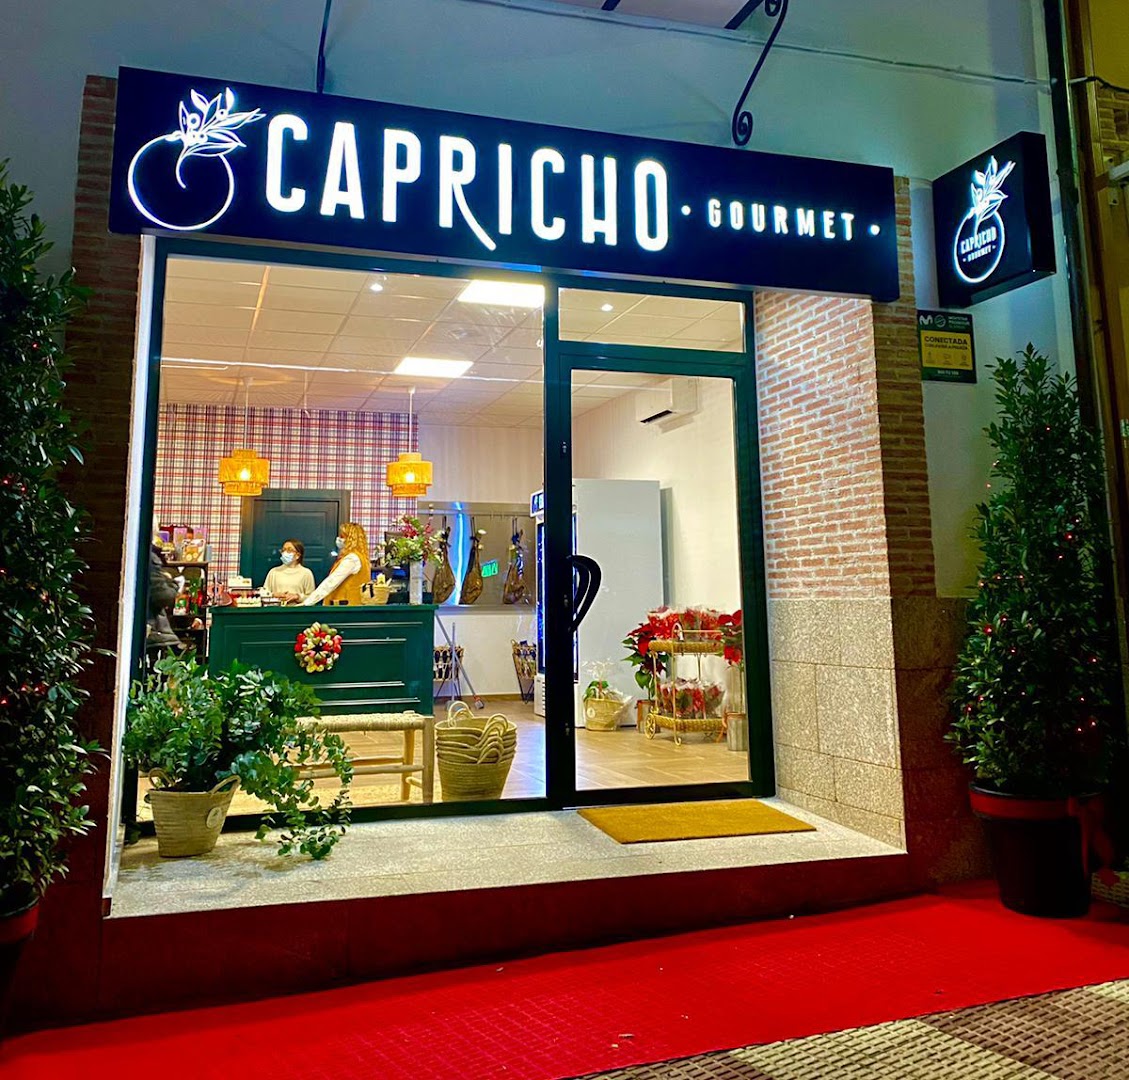 Capricho Gourmet